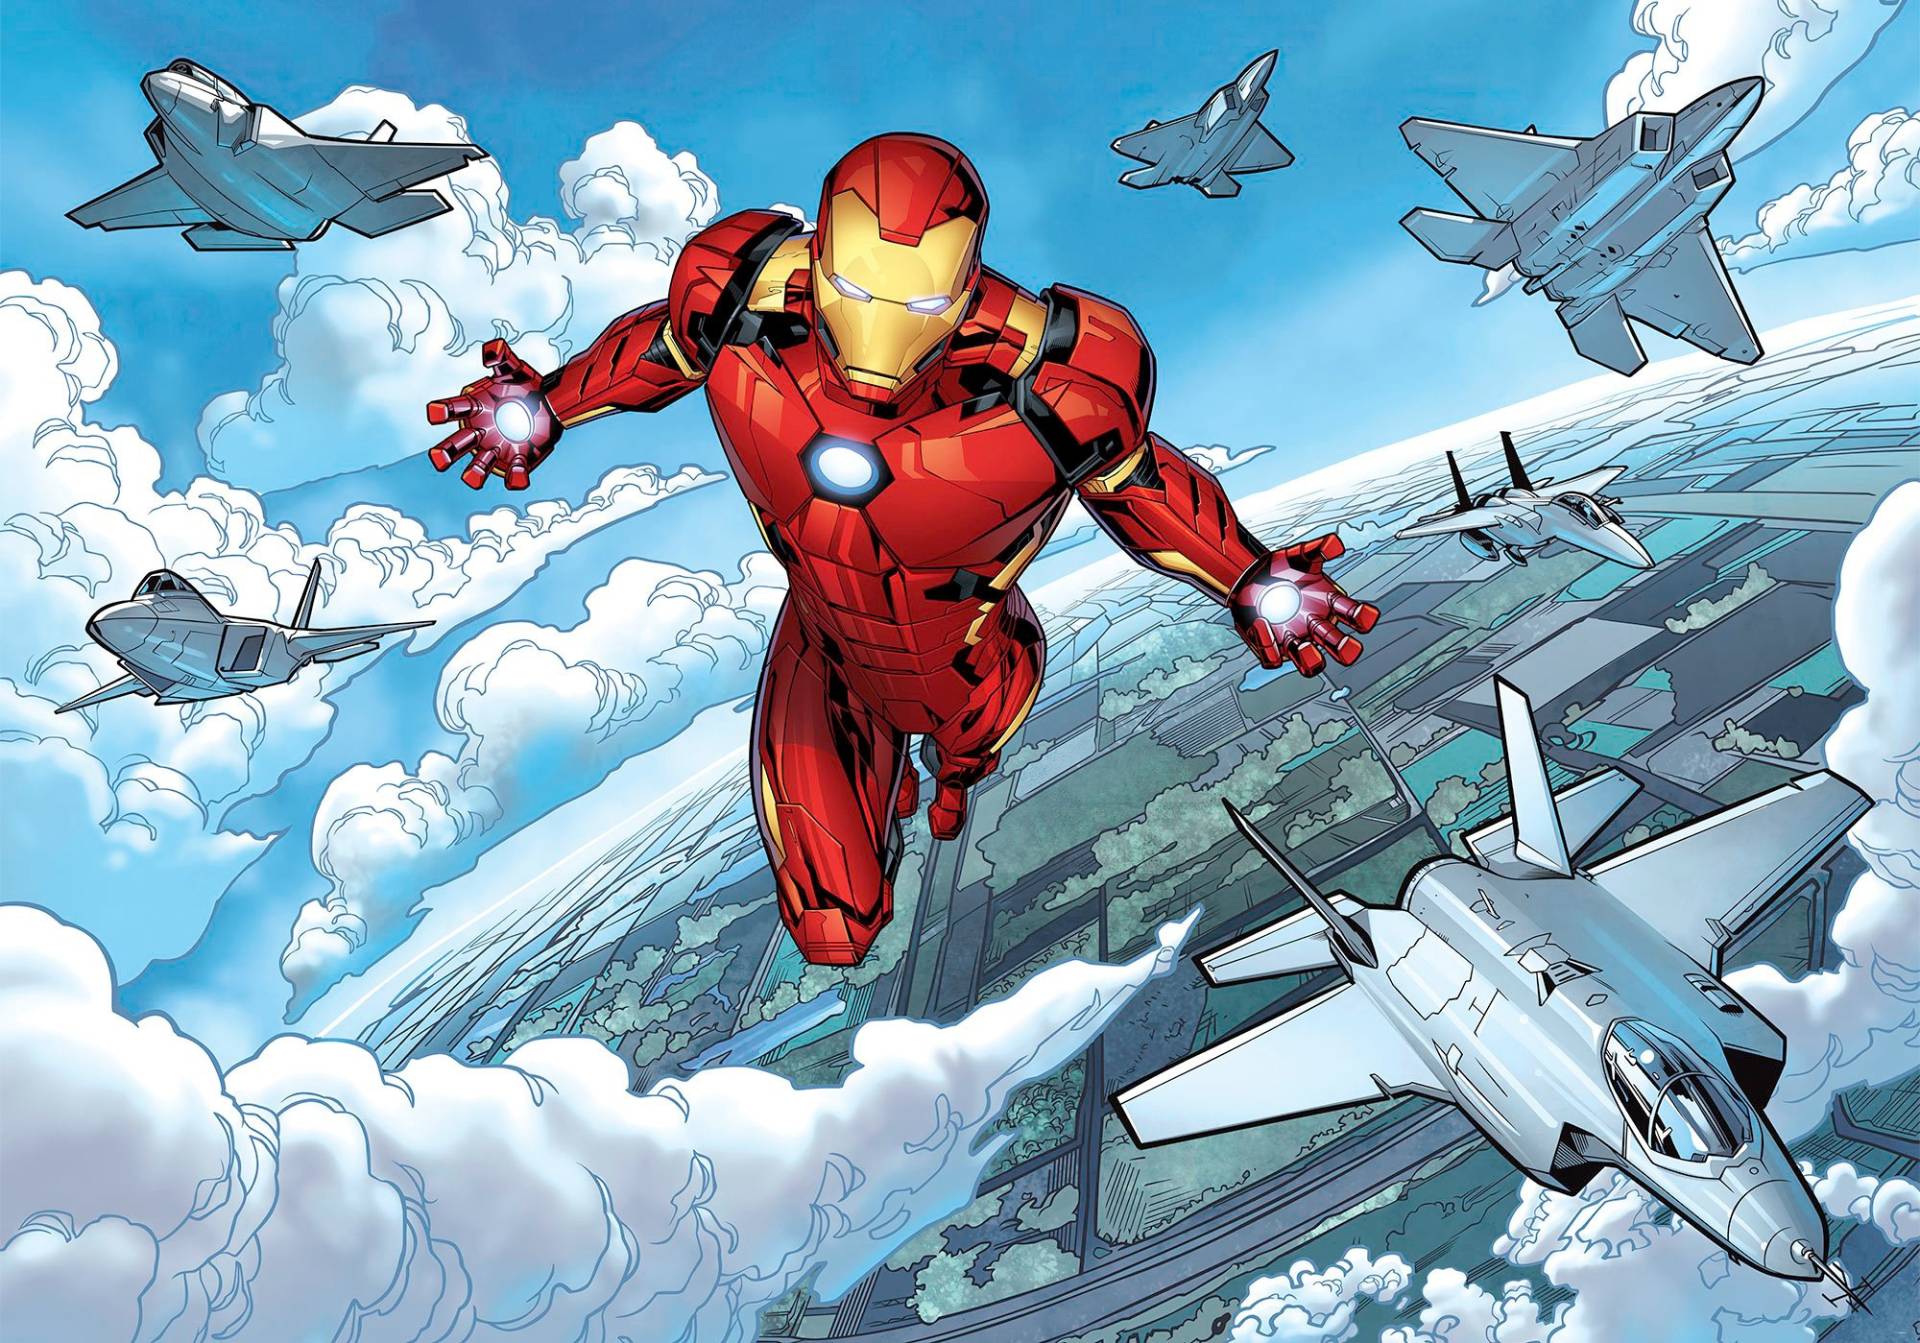 Komar Vliestapete "Iron Man Flight" von Komar